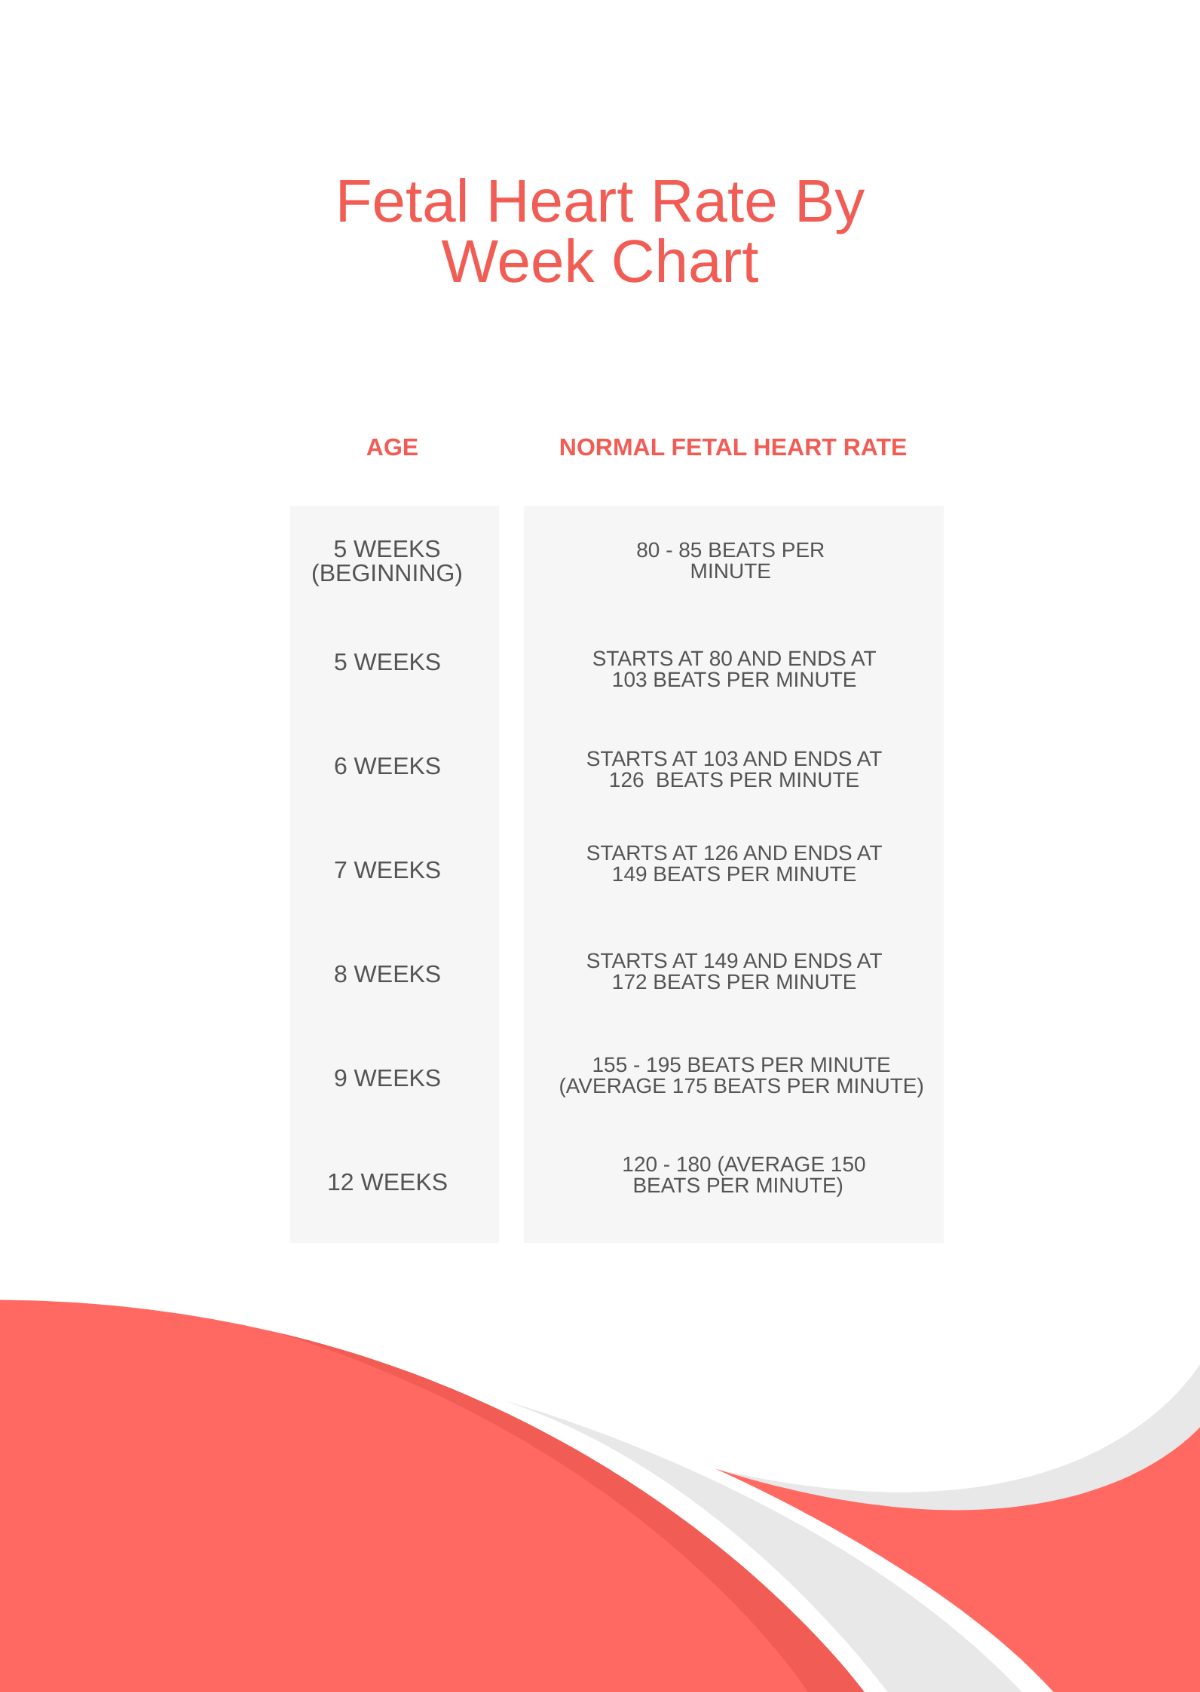 Fetal Heart Rate By Week Chart Template